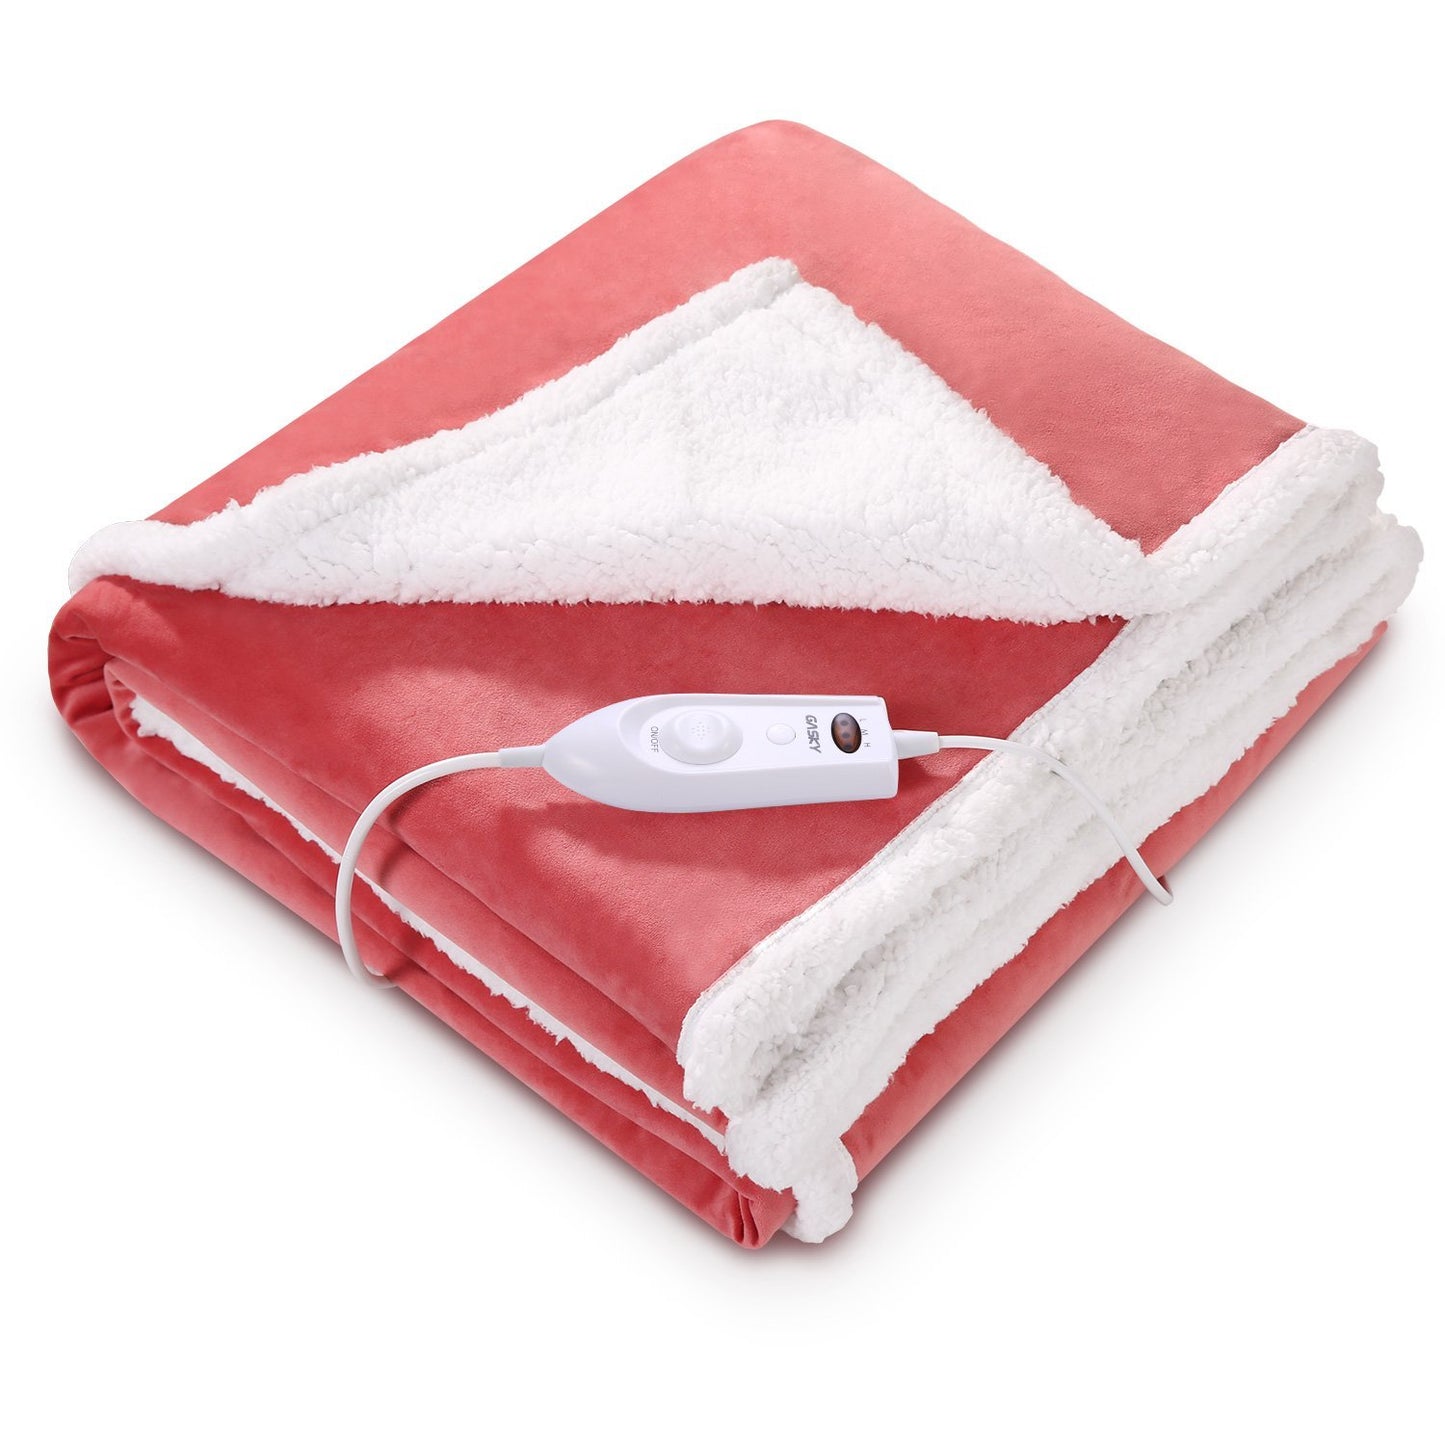 Electric Heated Blanket Machine Washable 50x60 Size Soft